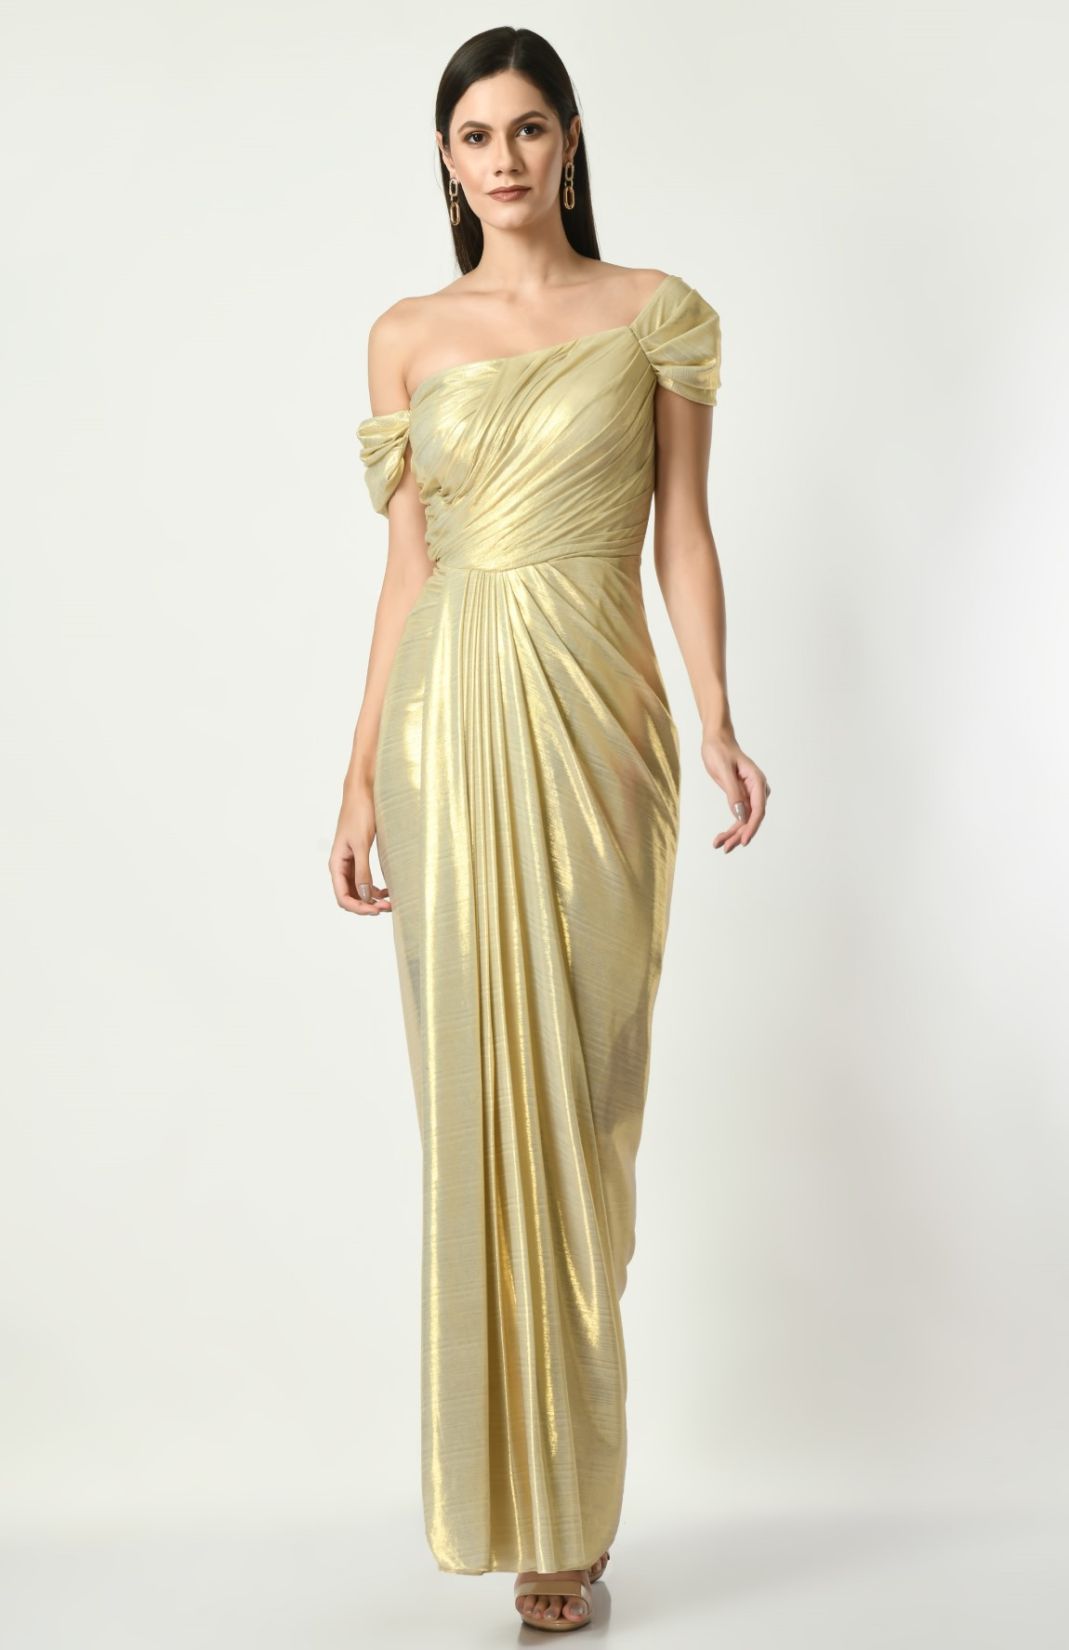 Golden Glitz N Glam - Off Shoulder Draped Gown In Golden Metallic Color